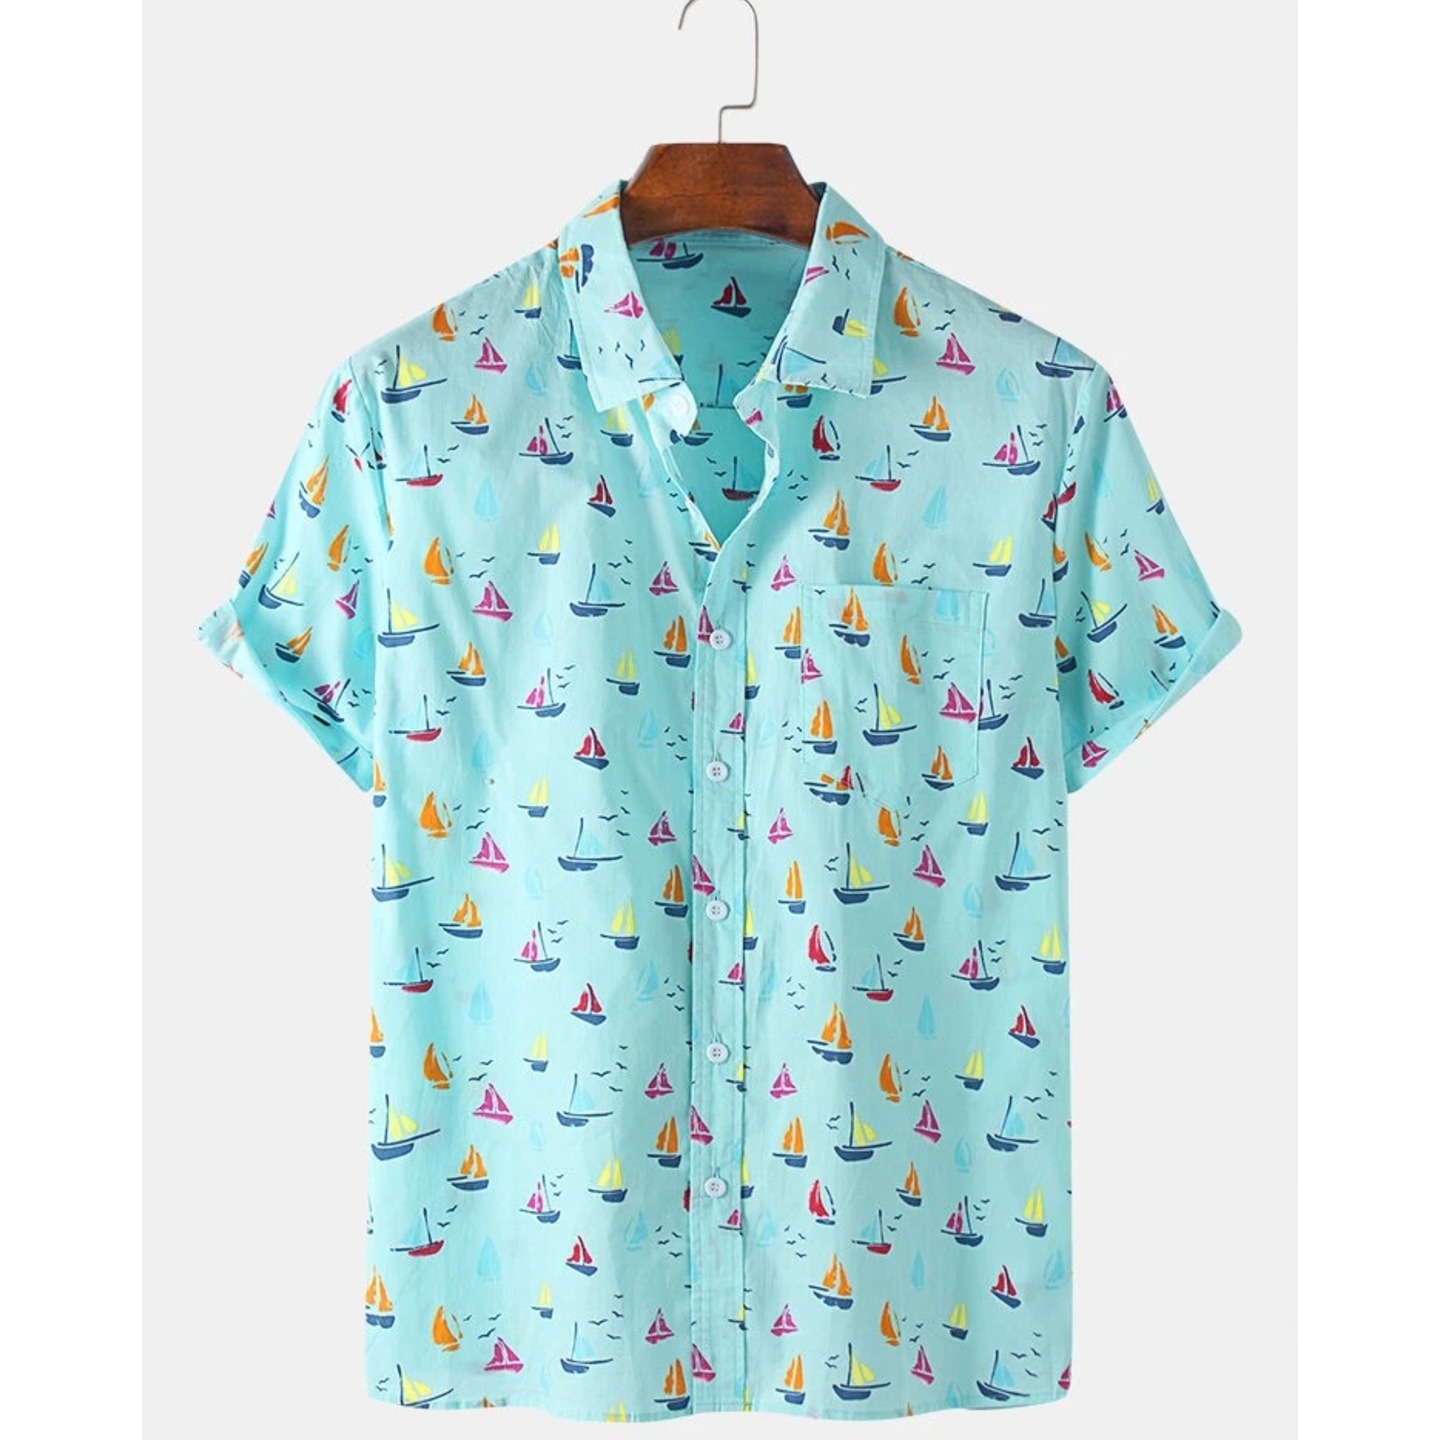 Multicolored Digital Printed Shirt